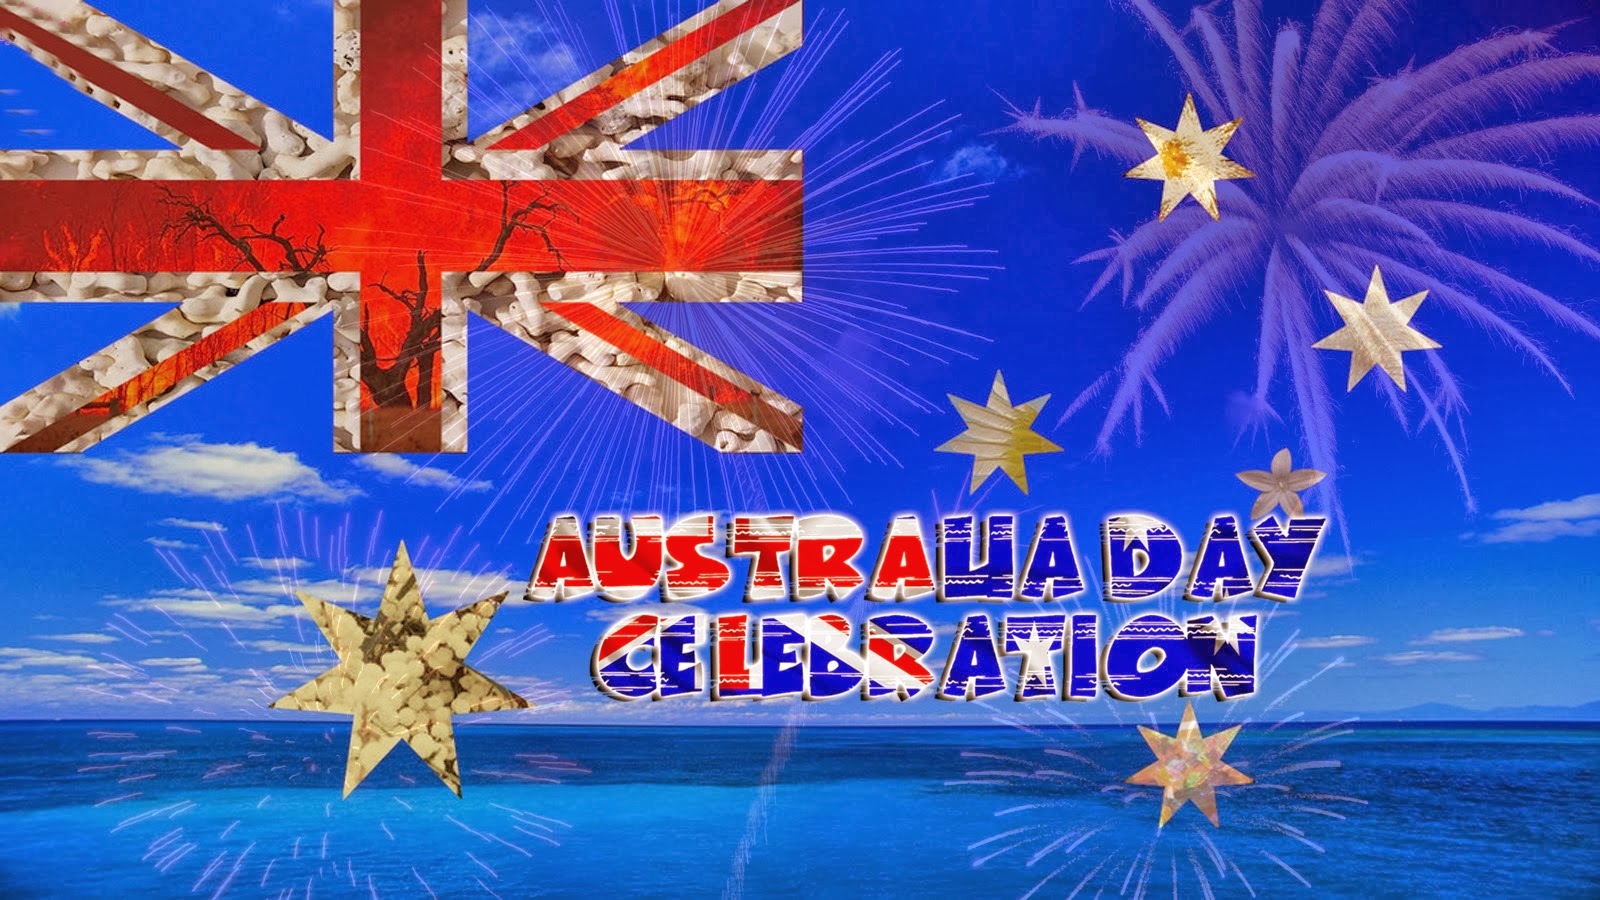 878350 descargar imagen día festivo, dia de australia, celebracion: fondos de pantalla y protectores de pantalla gratis